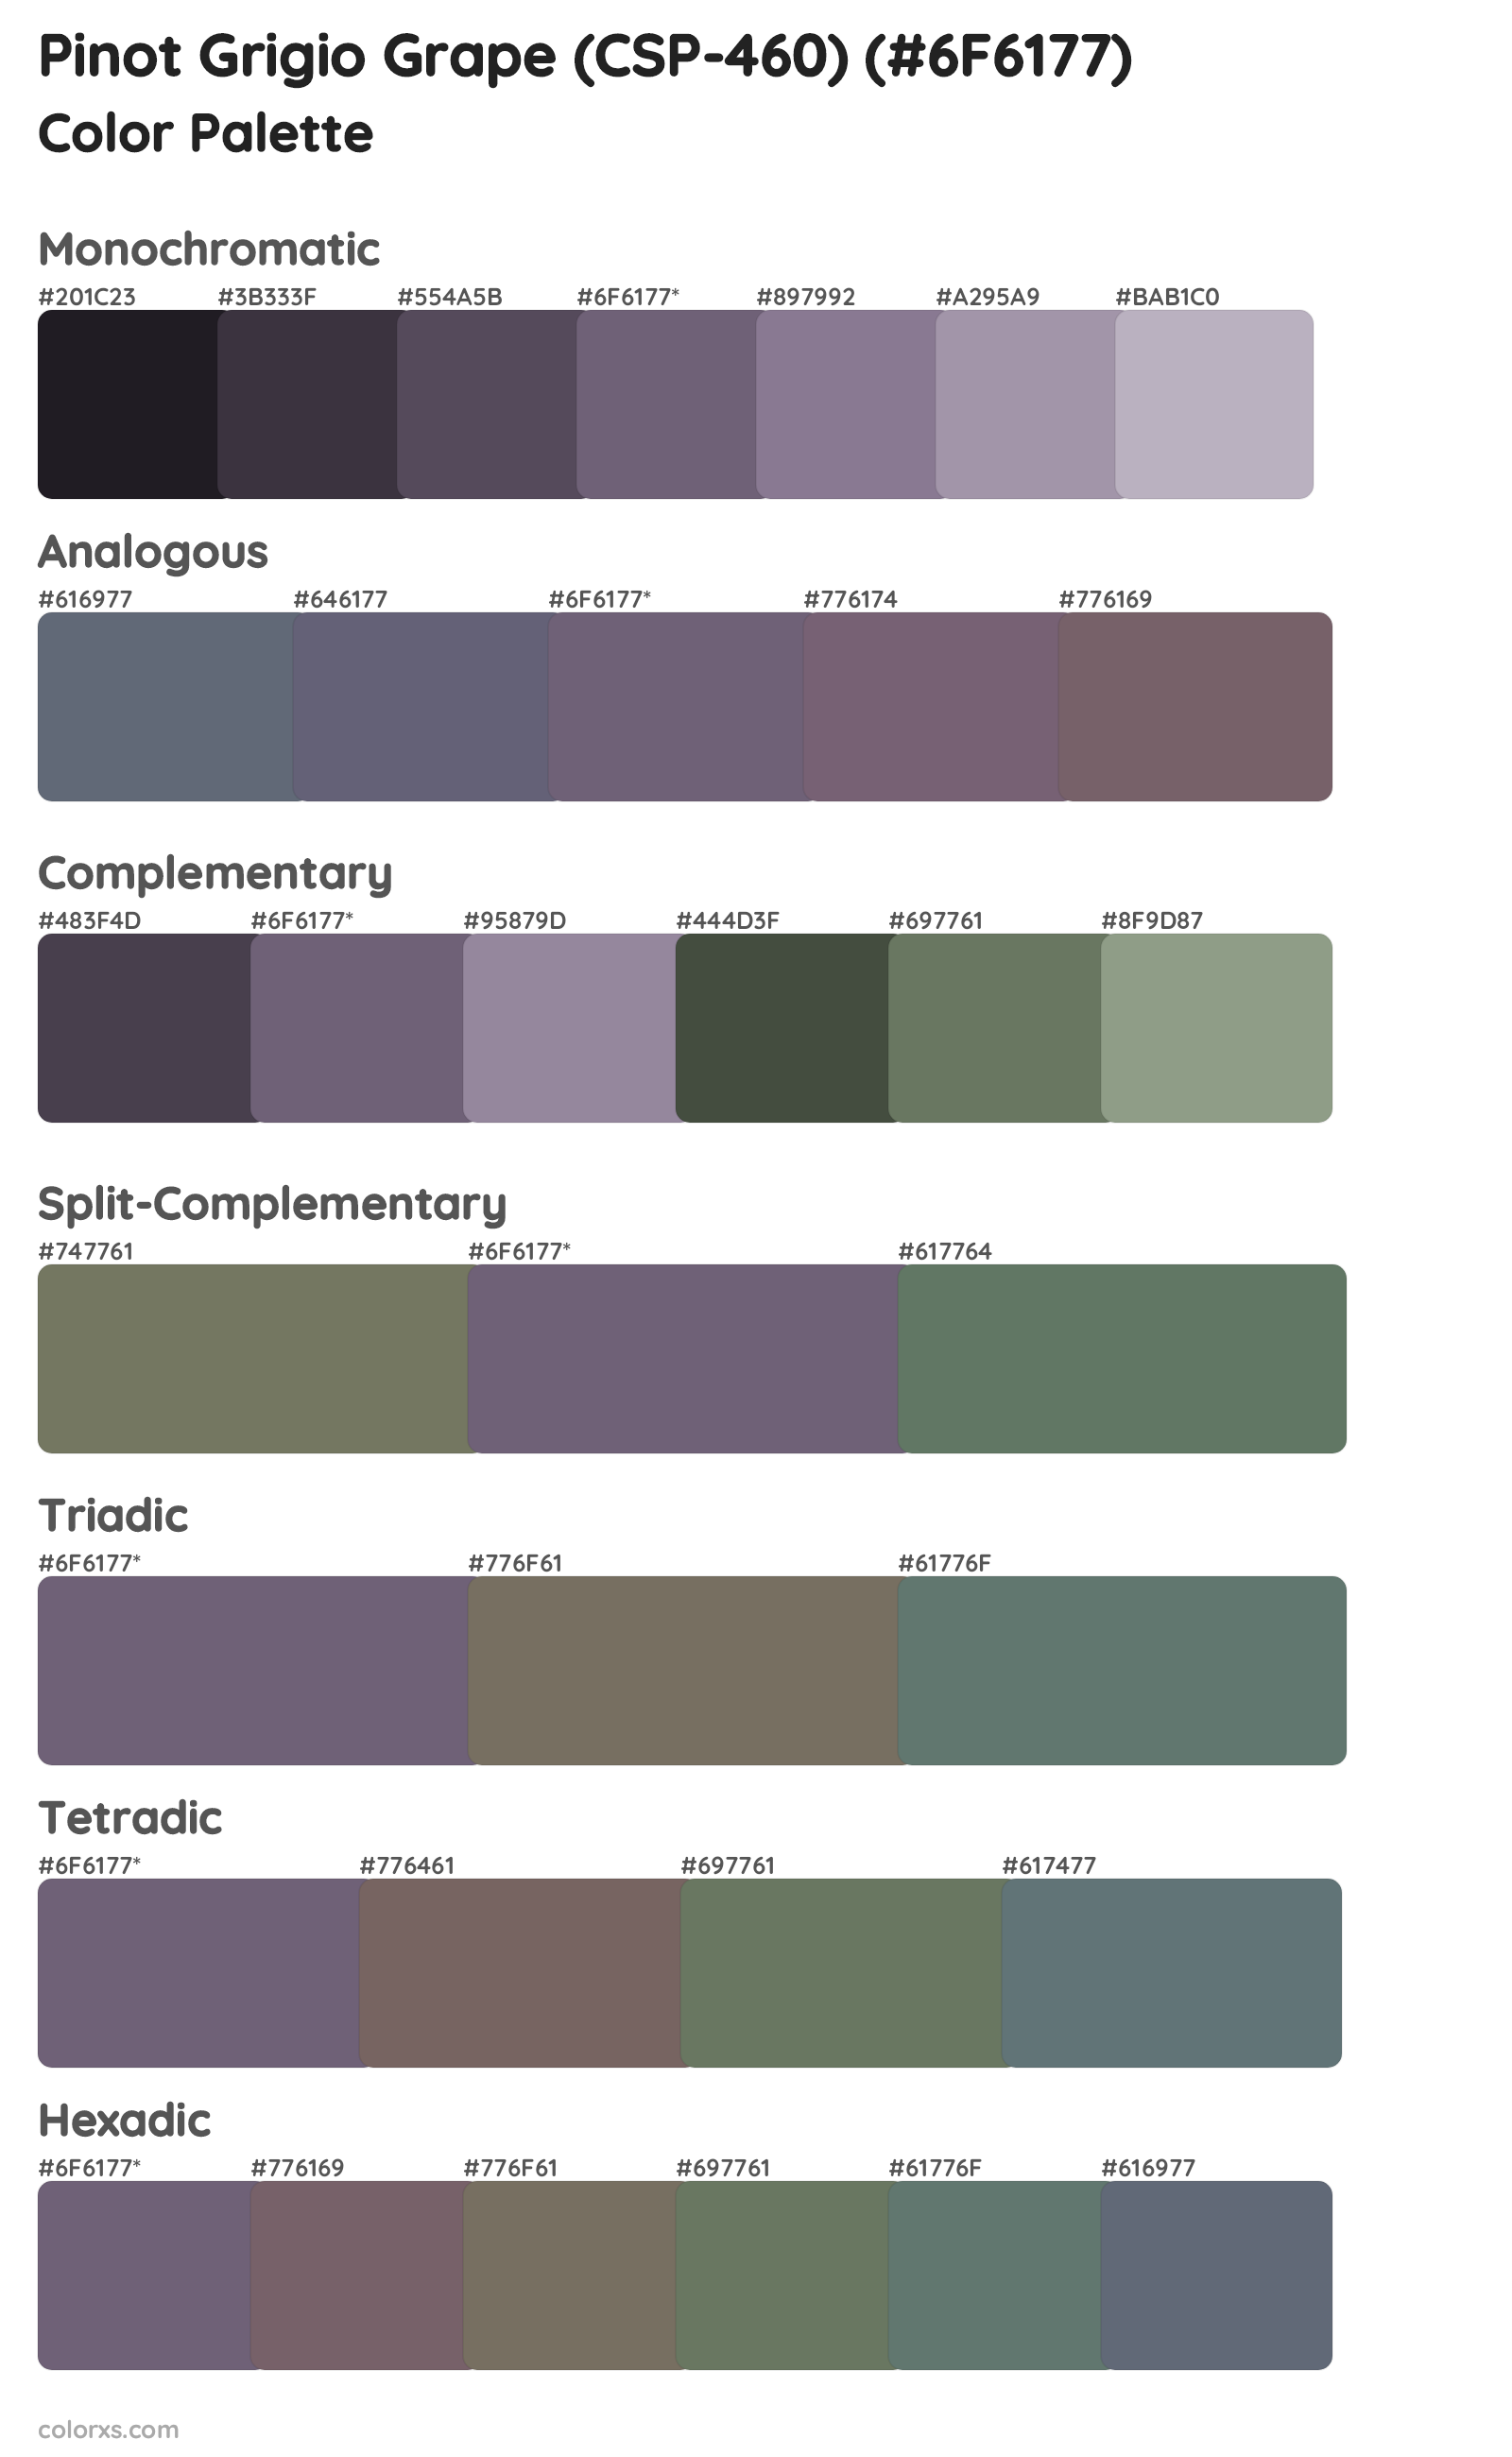 Pinot Grigio Grape (CSP-460) Color Scheme Palettes